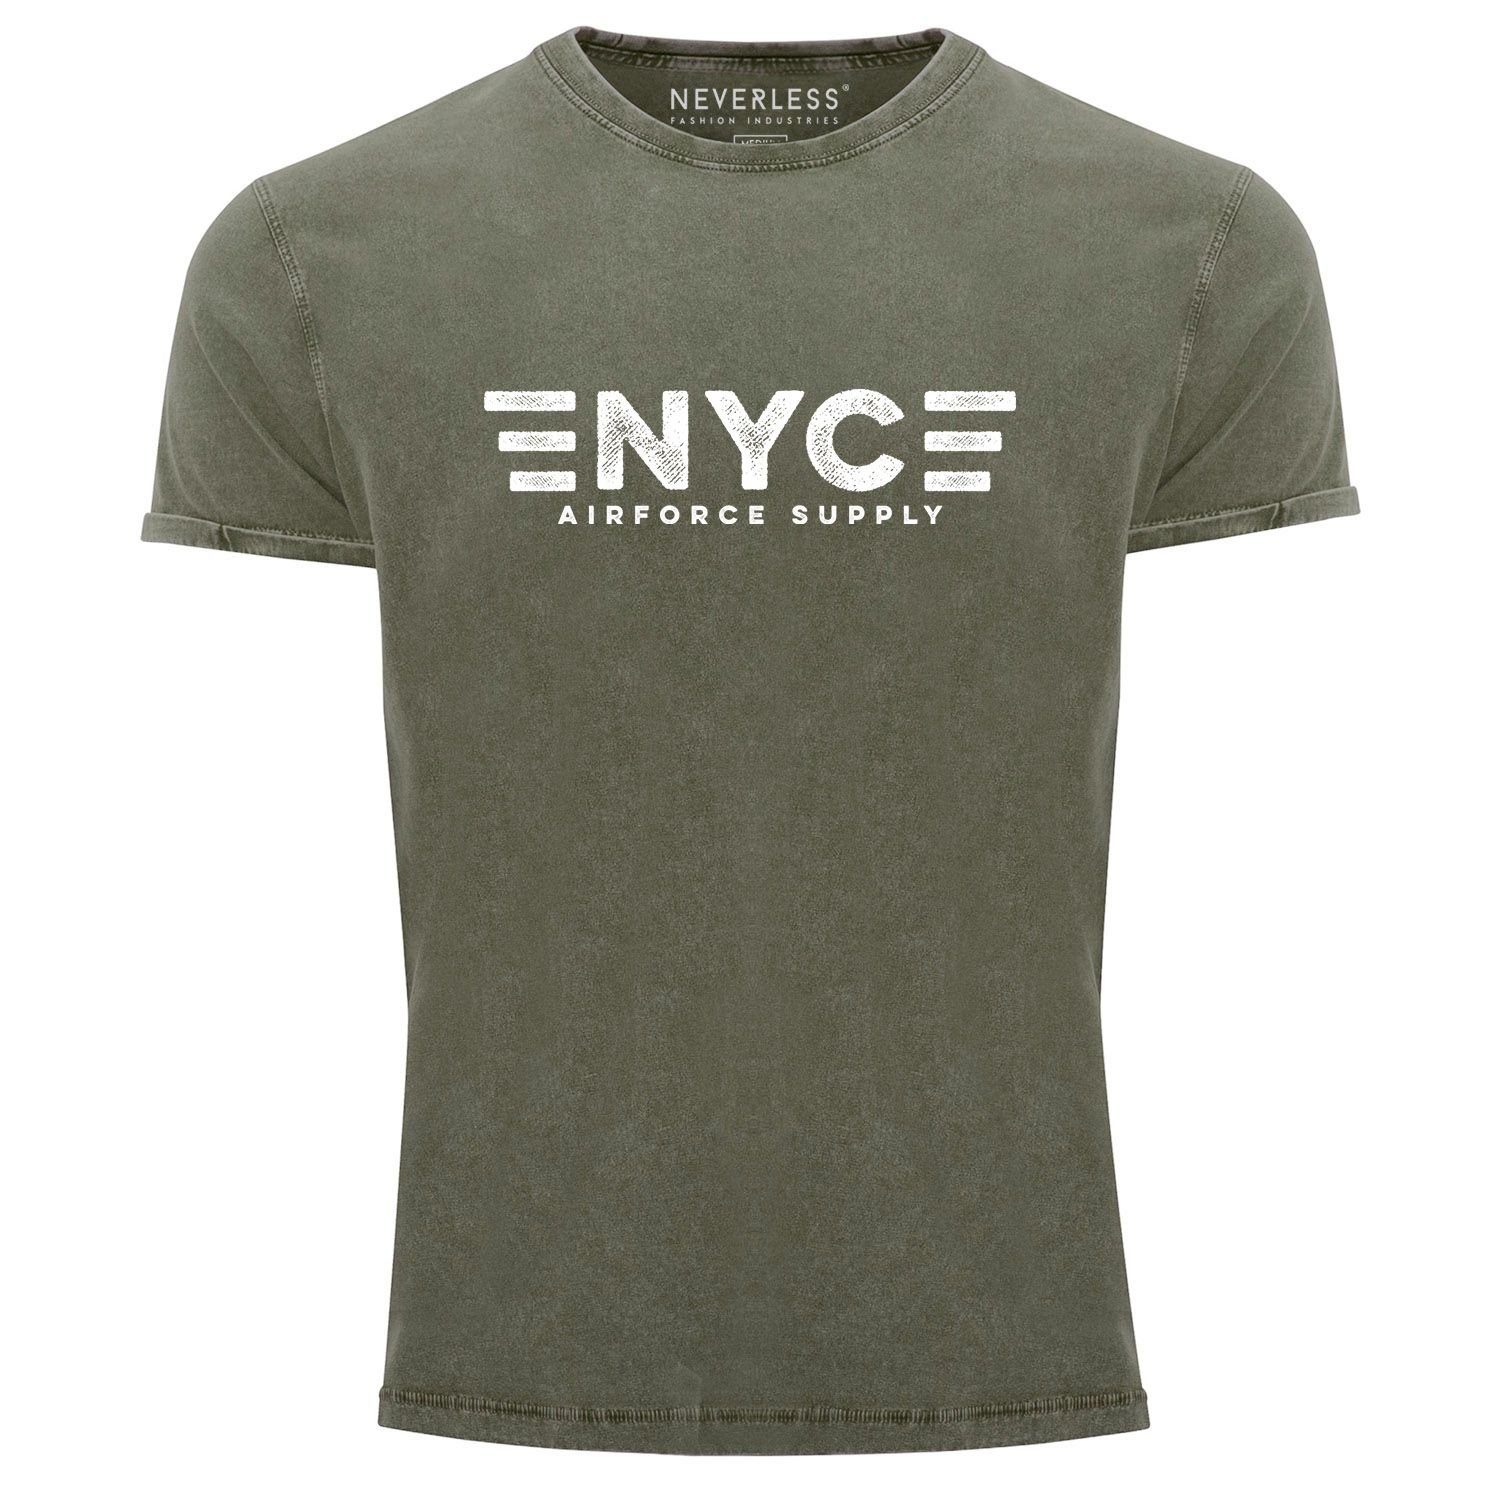 Neverless Print-Shirt Herren Vintage Shirt Aufdruck NYC New York City Airforce Supply Print Printshirt T-Shirt Used Look Slim Fit Neverless® mit Print